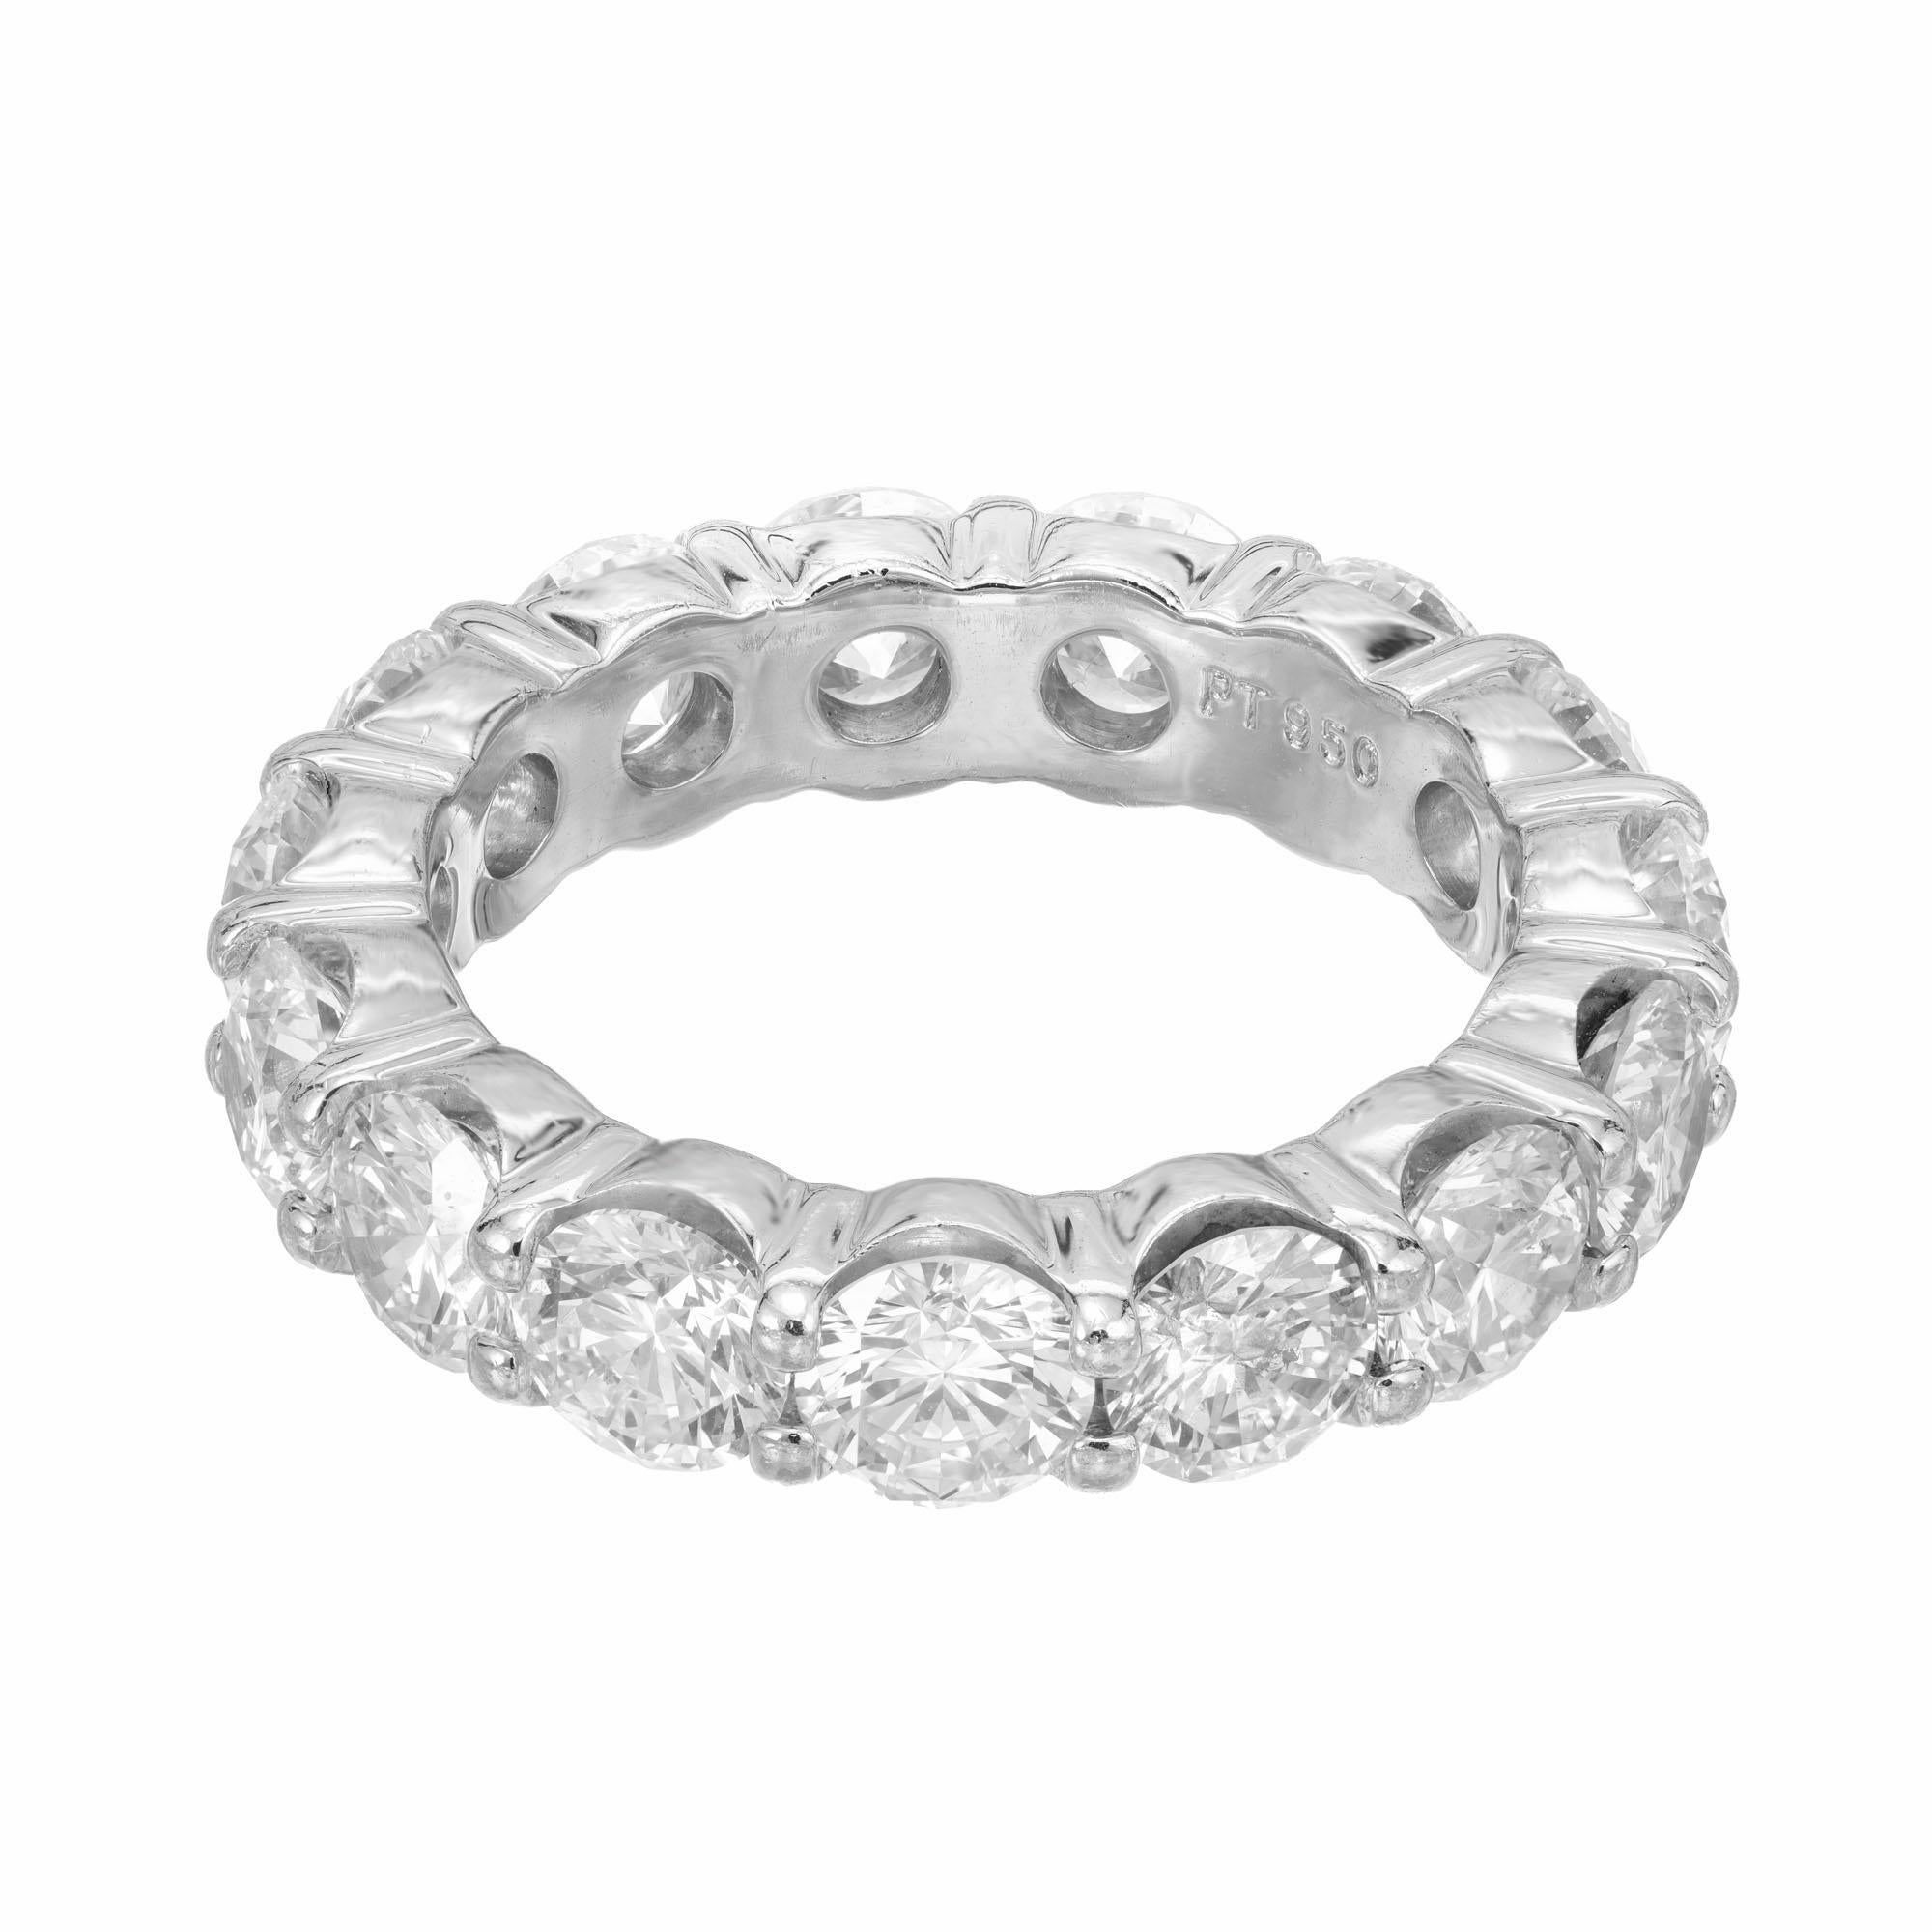 Round Cut Peter Suchy 4.95 Carat Diamond Platinum Eternity Wedding Band Ring For Sale